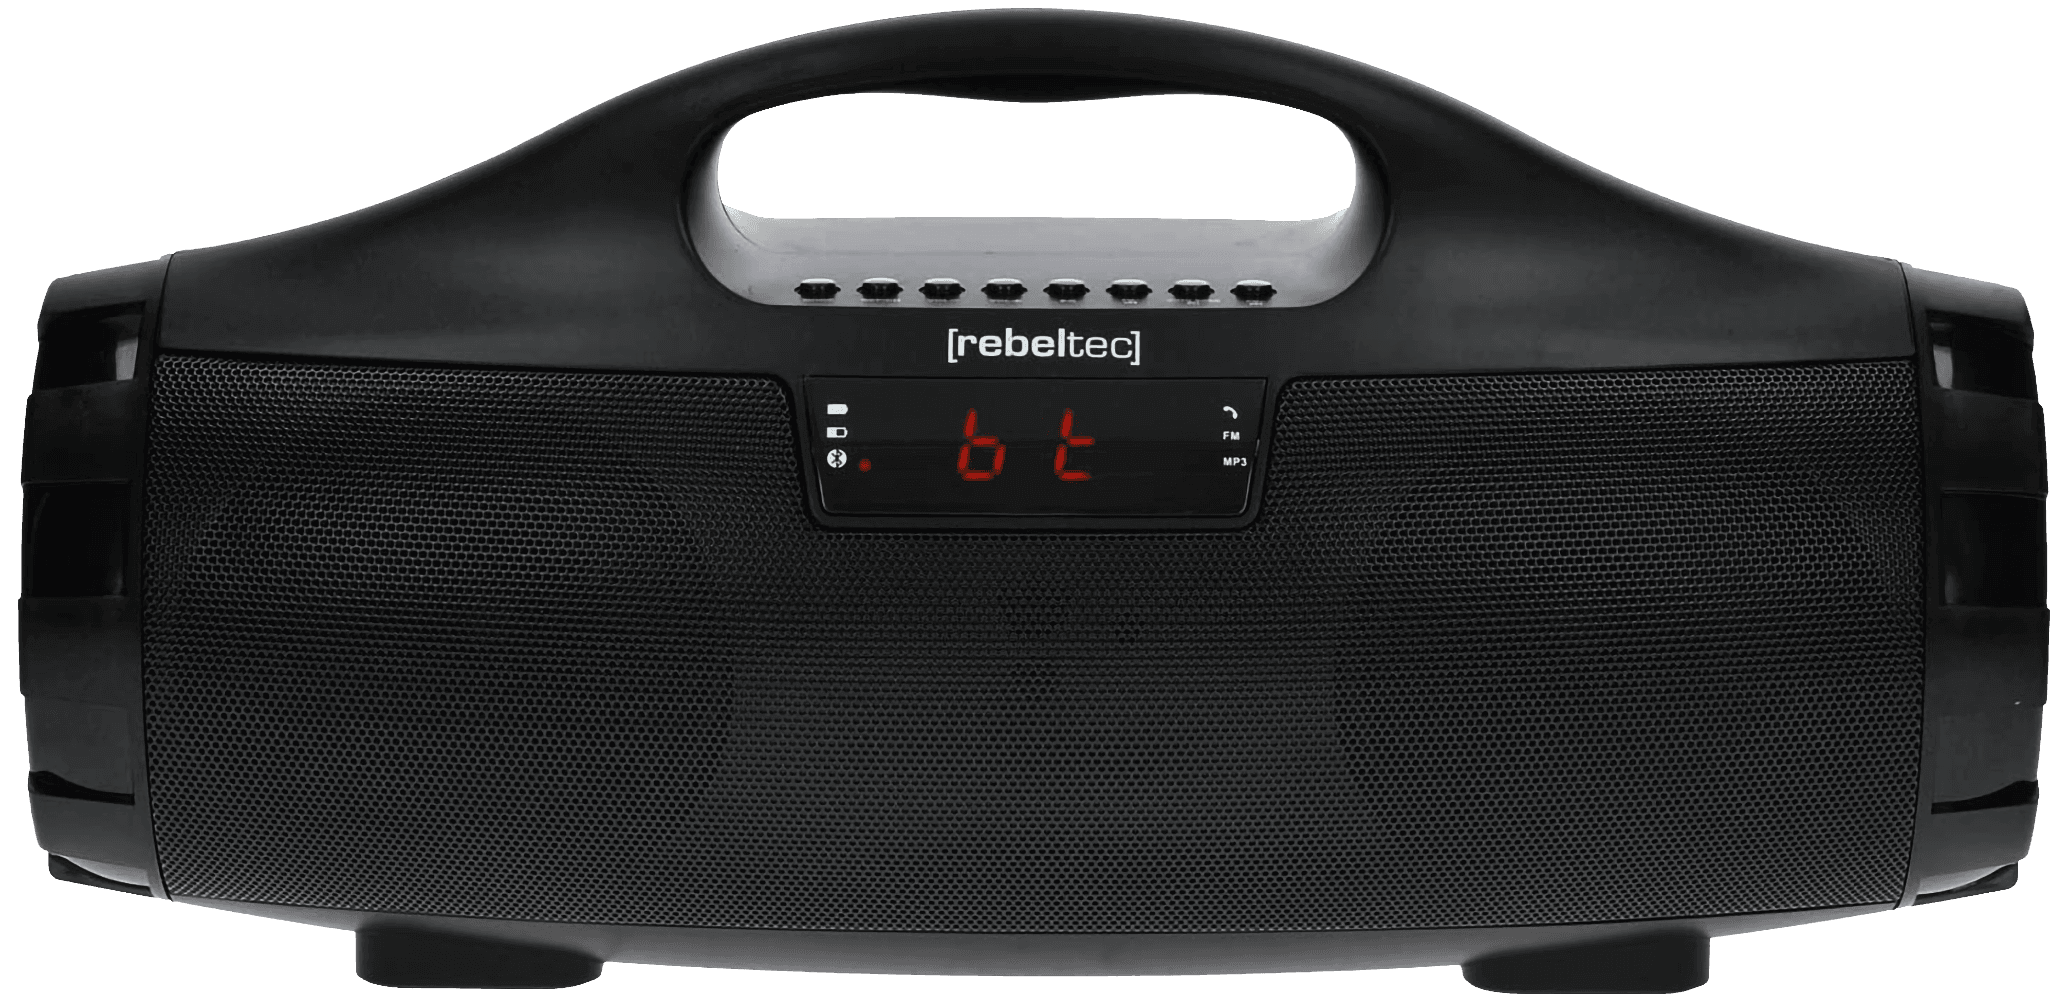 Huawei Y7 2019 kompatibilis bluetooth hangszóró Rebeltec Soundbox 390 fekete